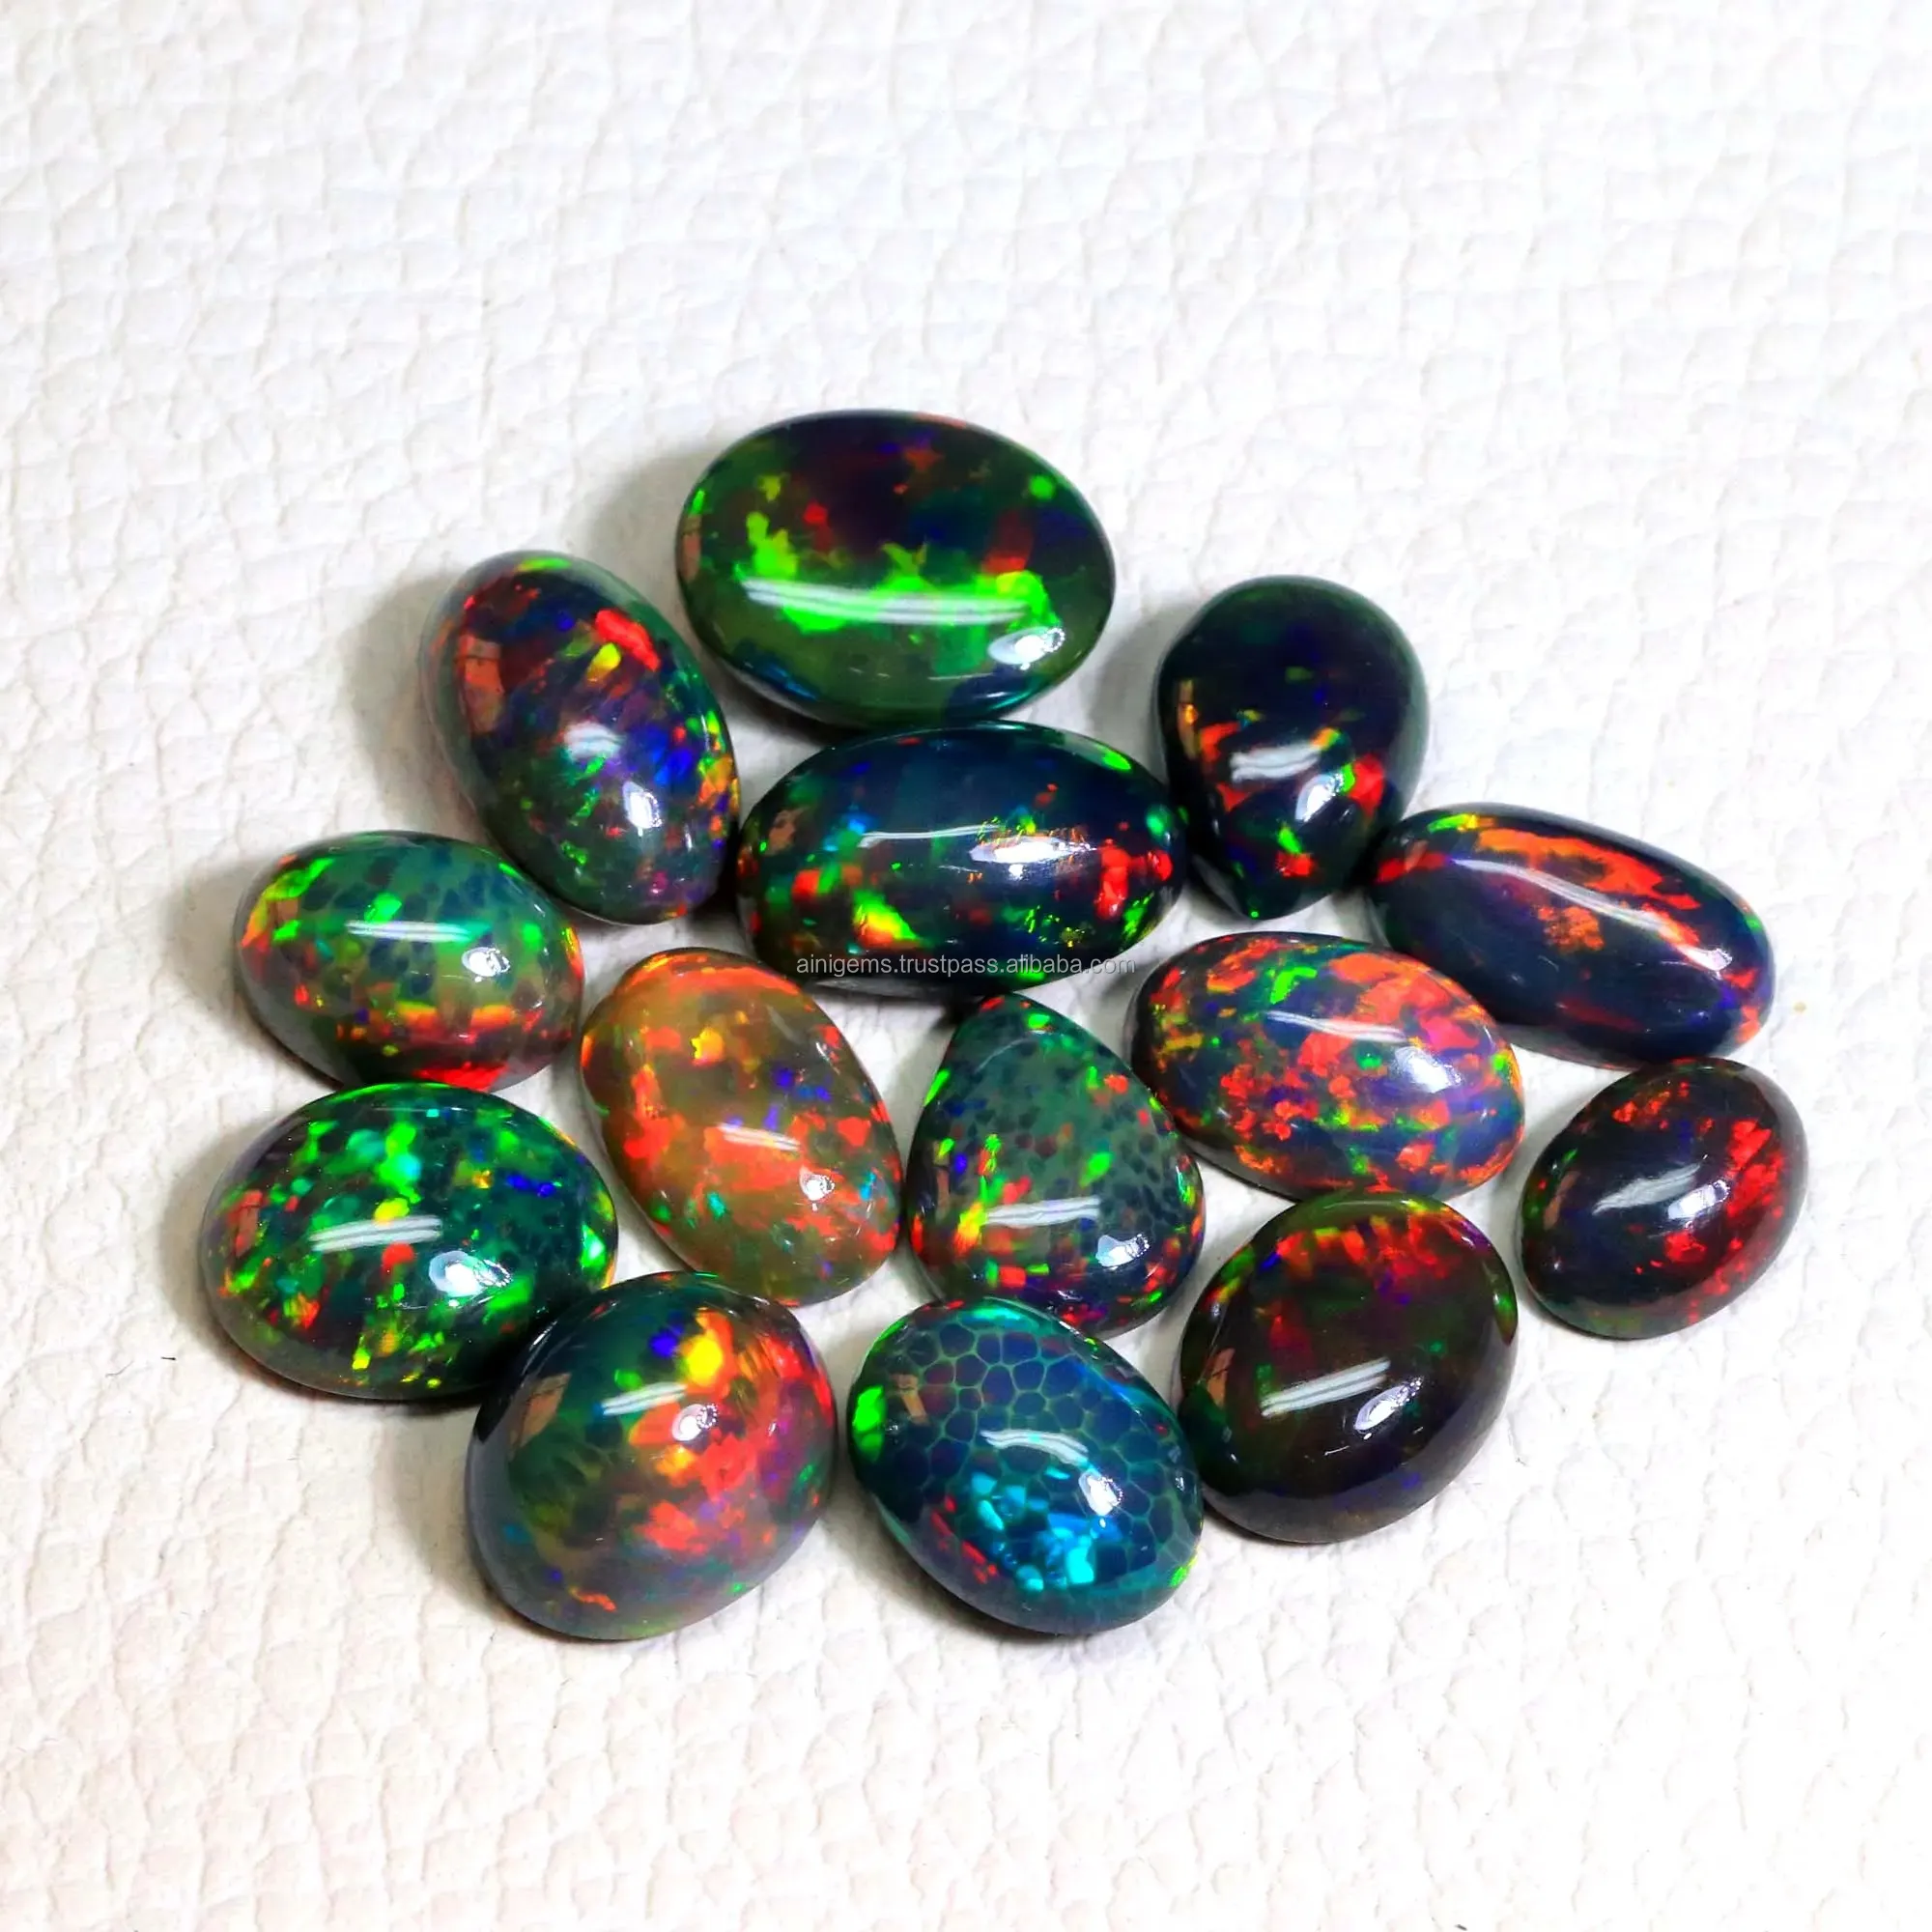 Batu permata Opal hitam Etiopia alami Cabochon Semi mulia bentuk campuran batu permata Opal hitam banyak batu halus dipoles